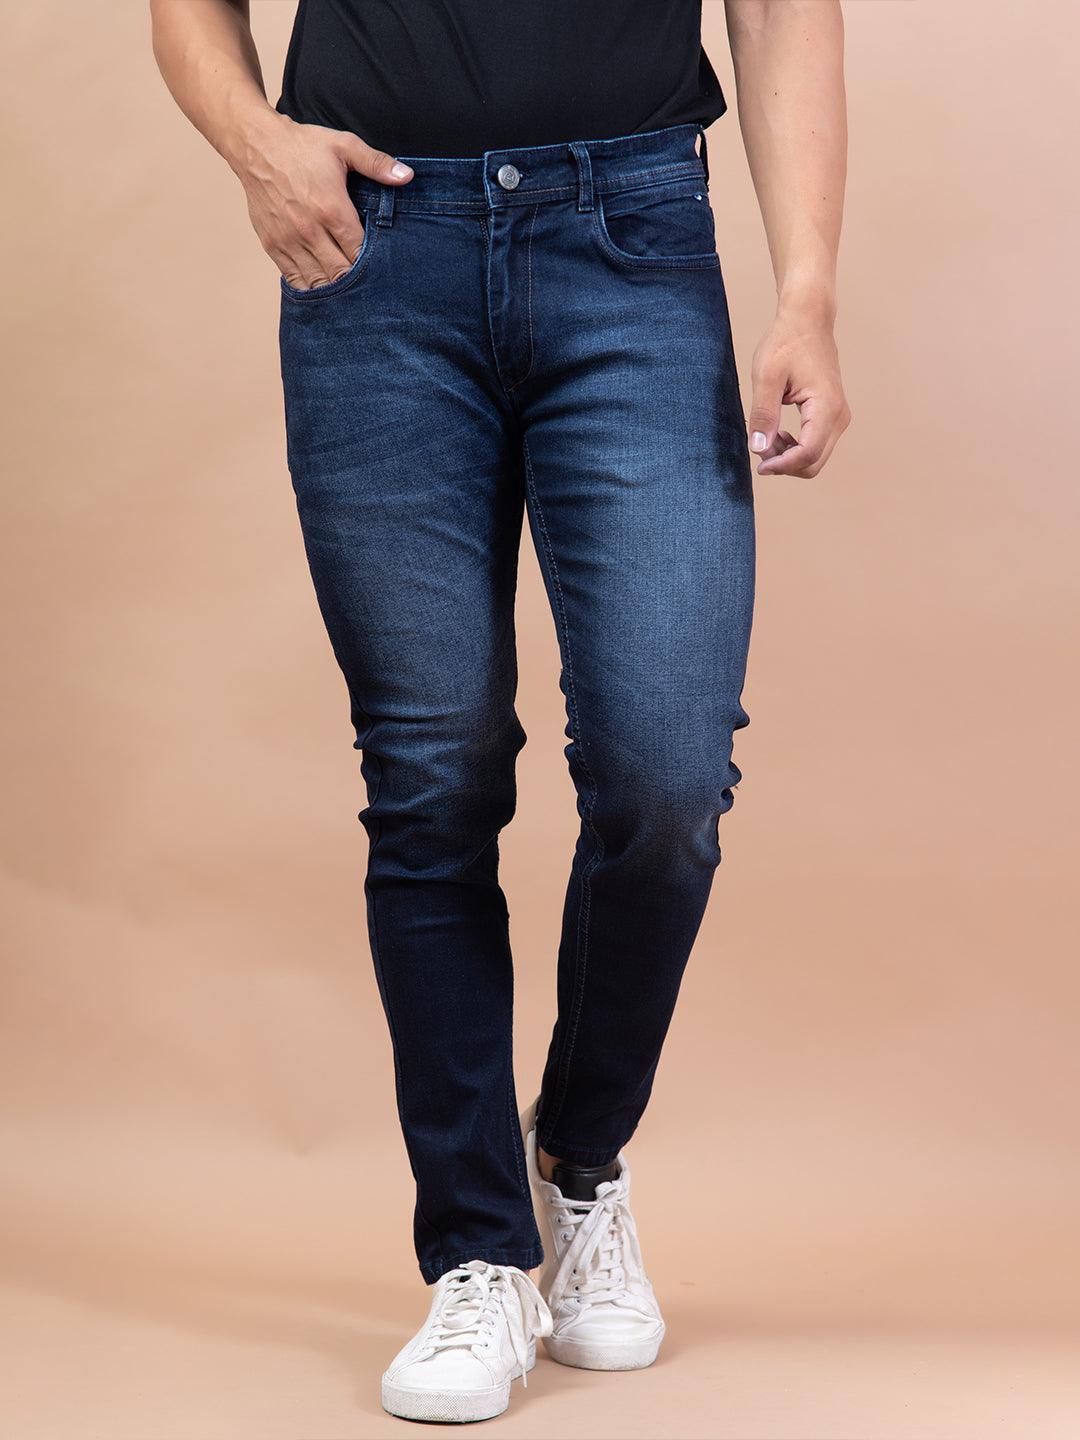 Buy Denim Blue Denim Men's Jeans Online